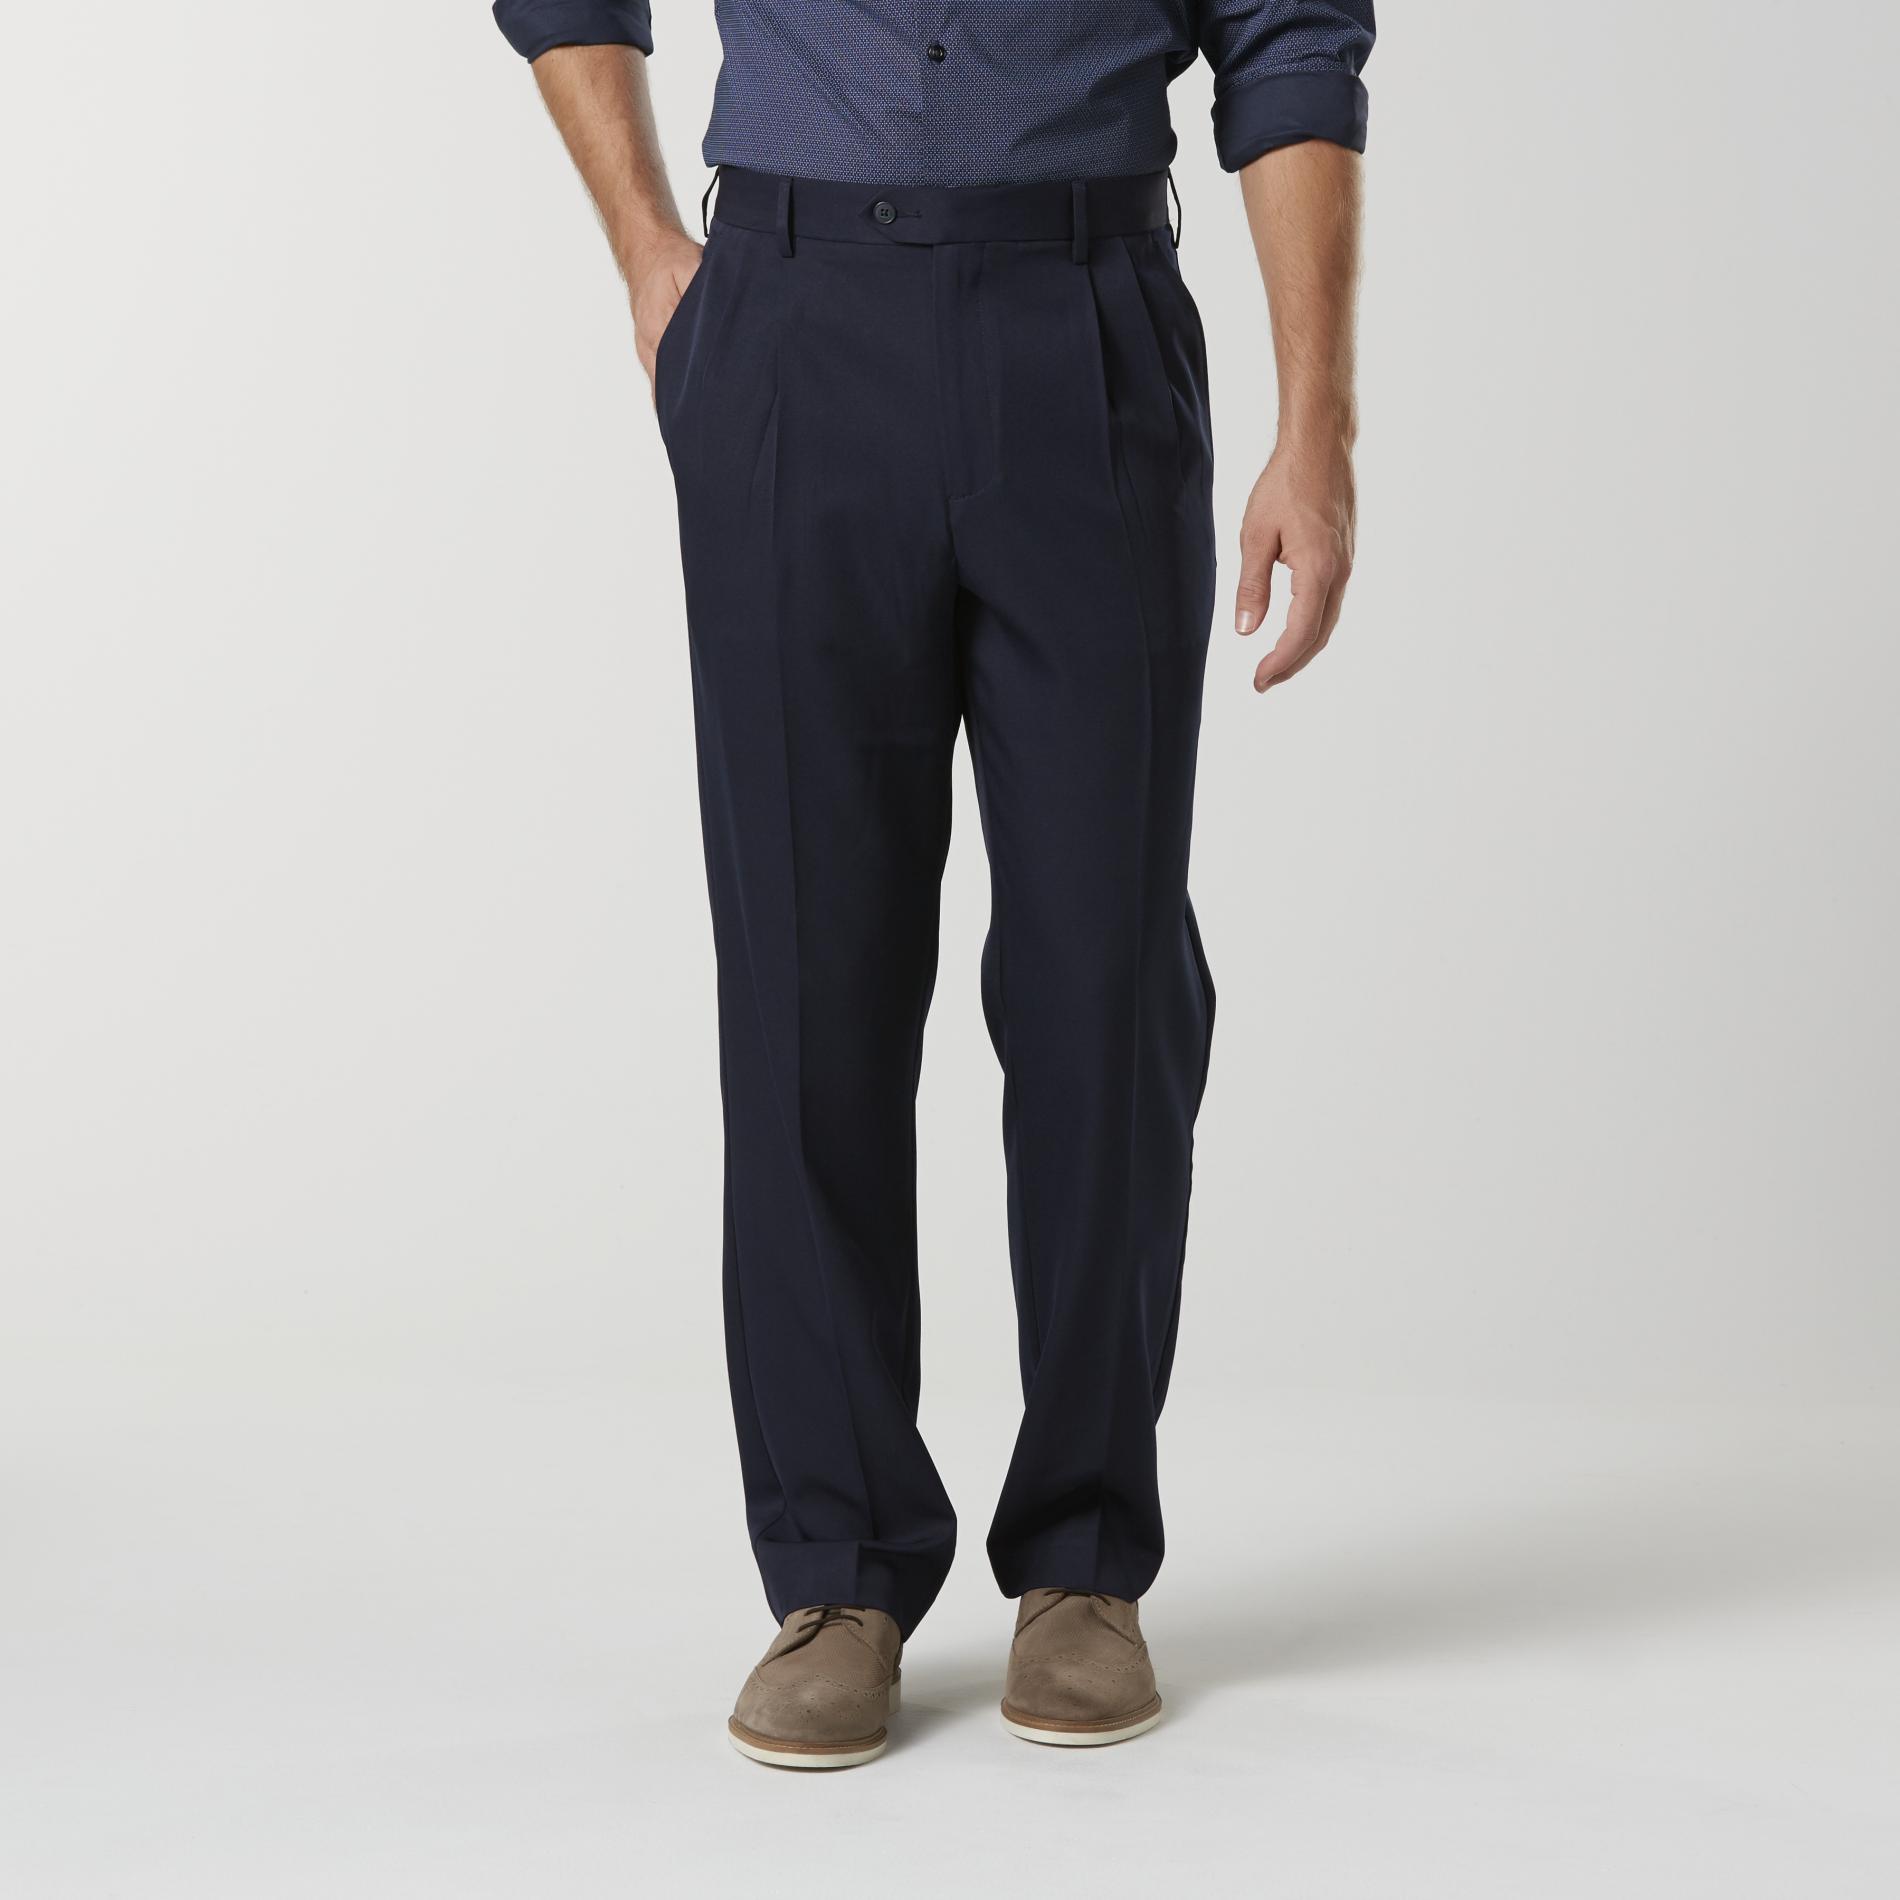 David Taylor Collection Men's Classic Fit Dress Pants | Shop Your Way ...